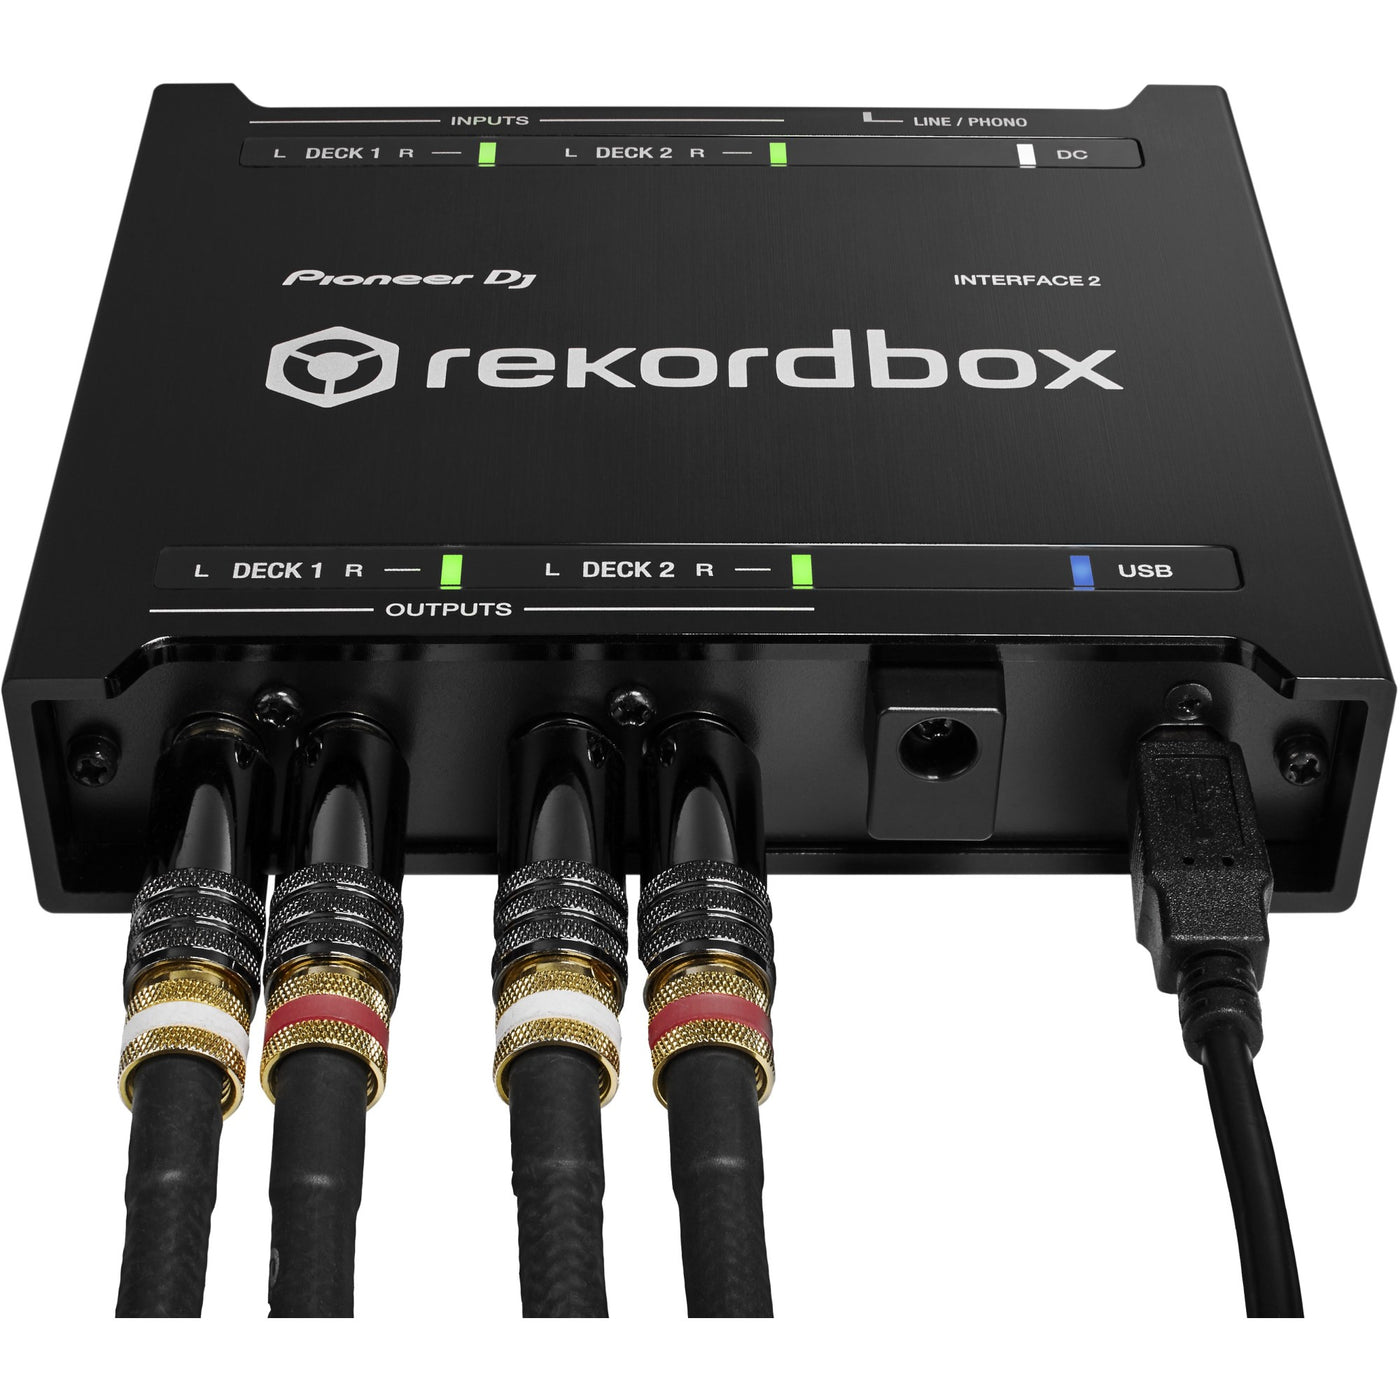 Pioneer DJ INTERFACE2 2-Channel Audio Interface for Rekordbox DVS,  Professional DJ Equipment, Control Audio DJ Set from Booth